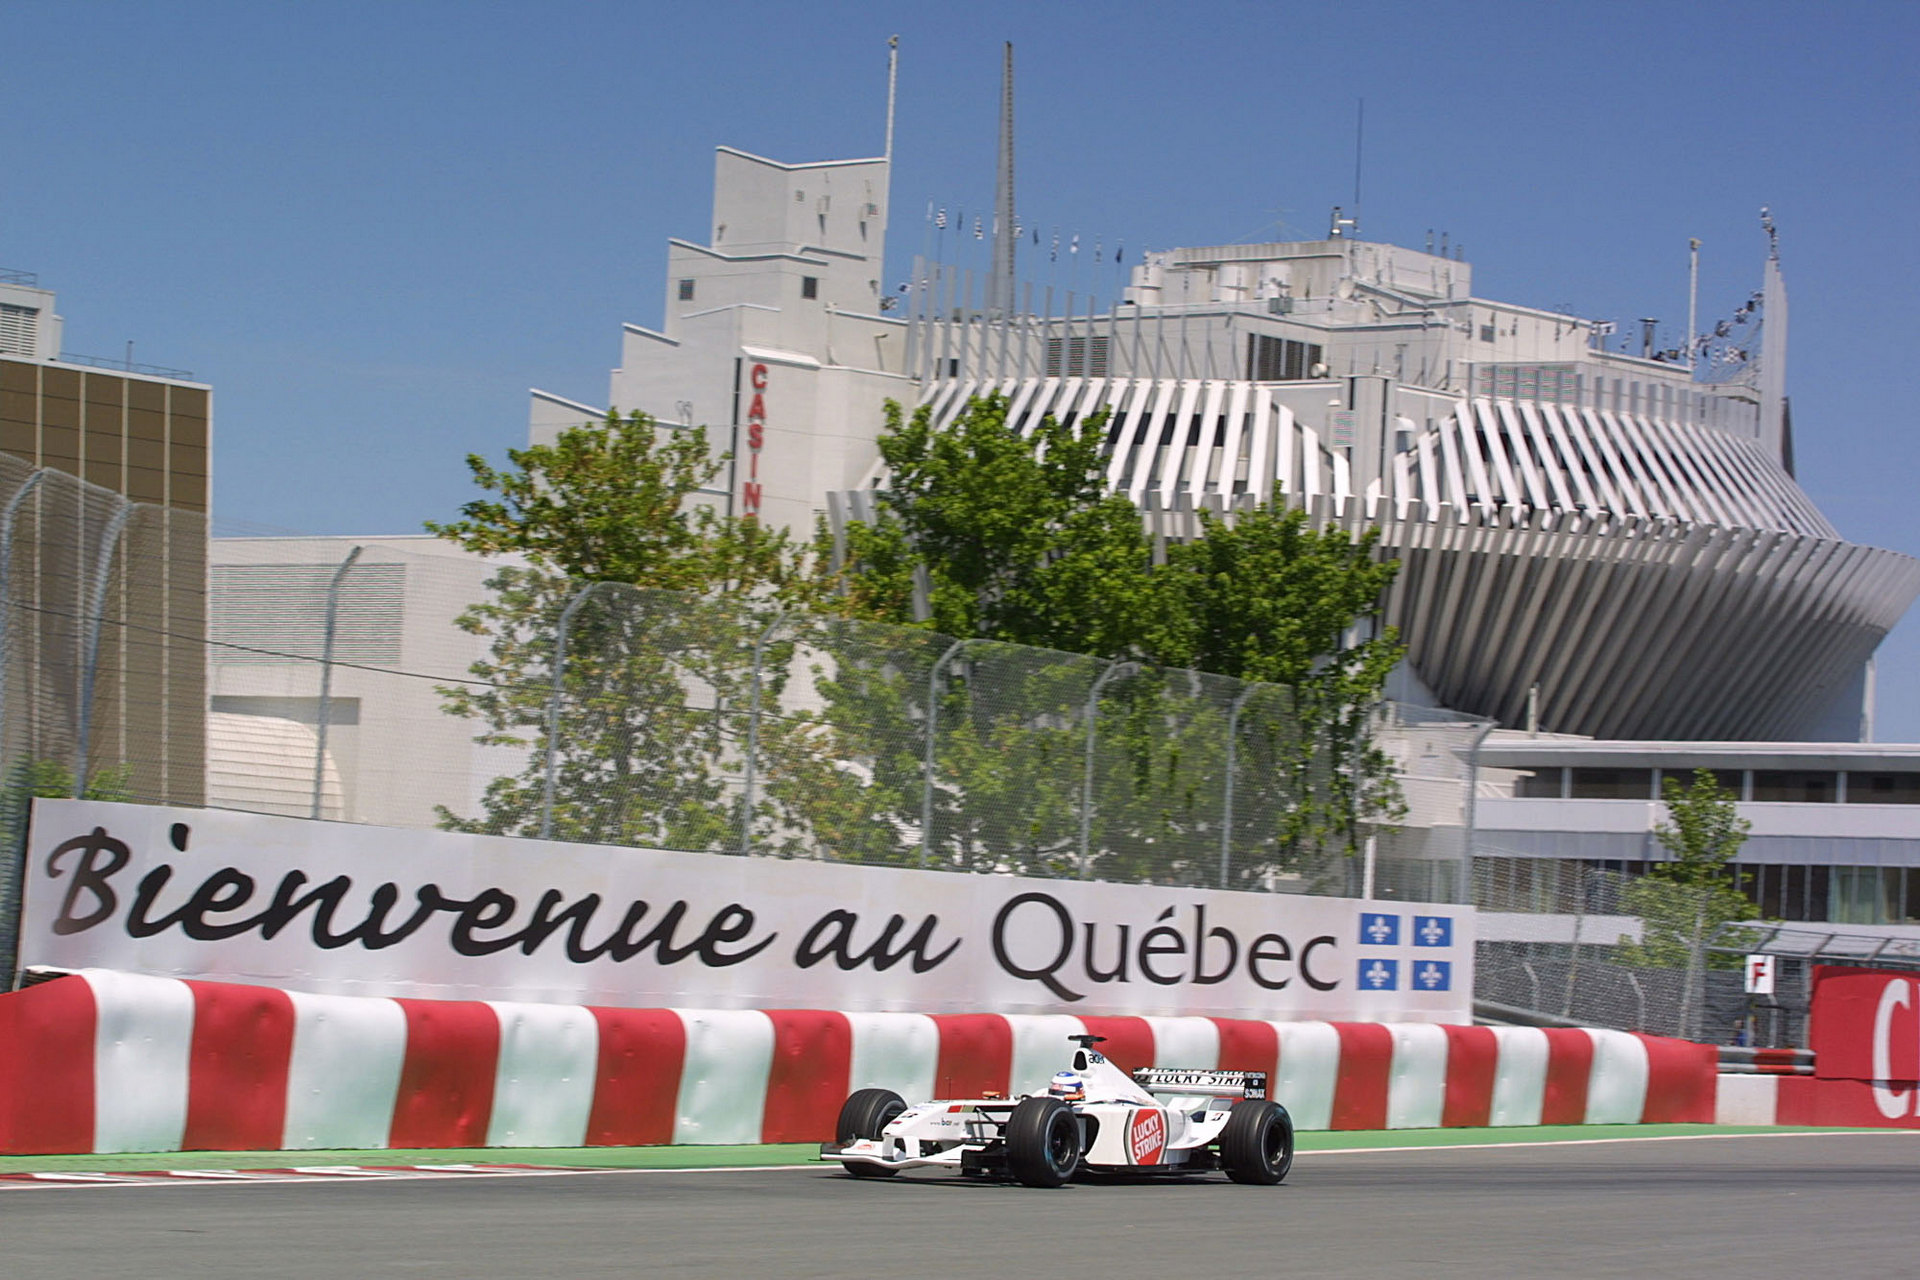 HD Wallpapers Formula Grand Prix of Canada F1 Fansite